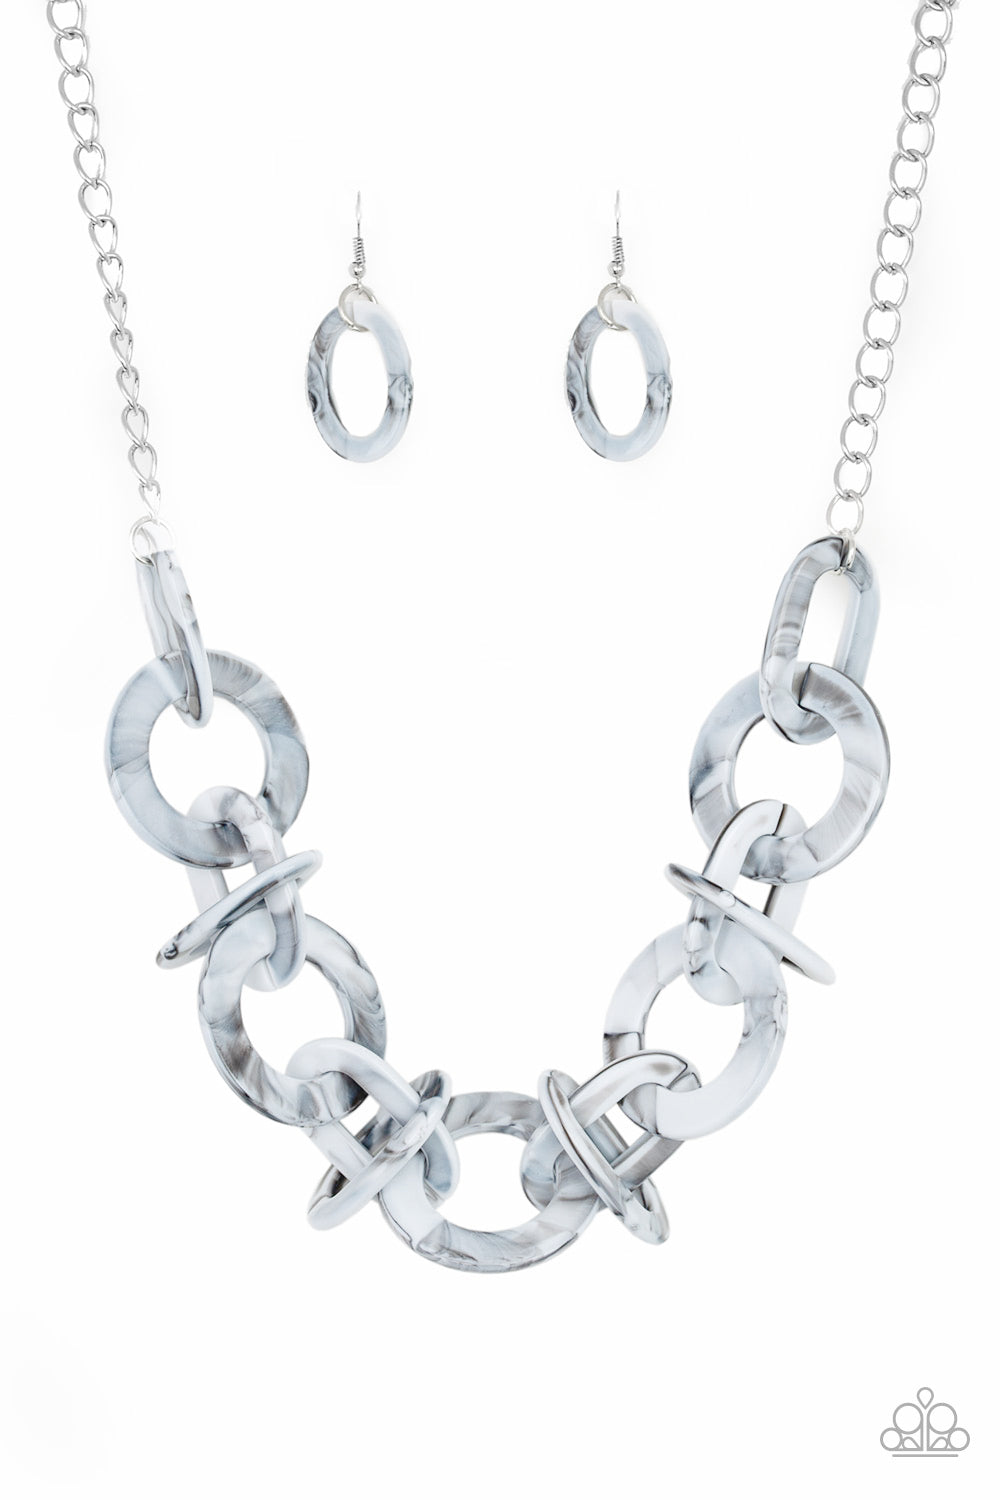 Chromatic Charm - Silver acrylic necklace